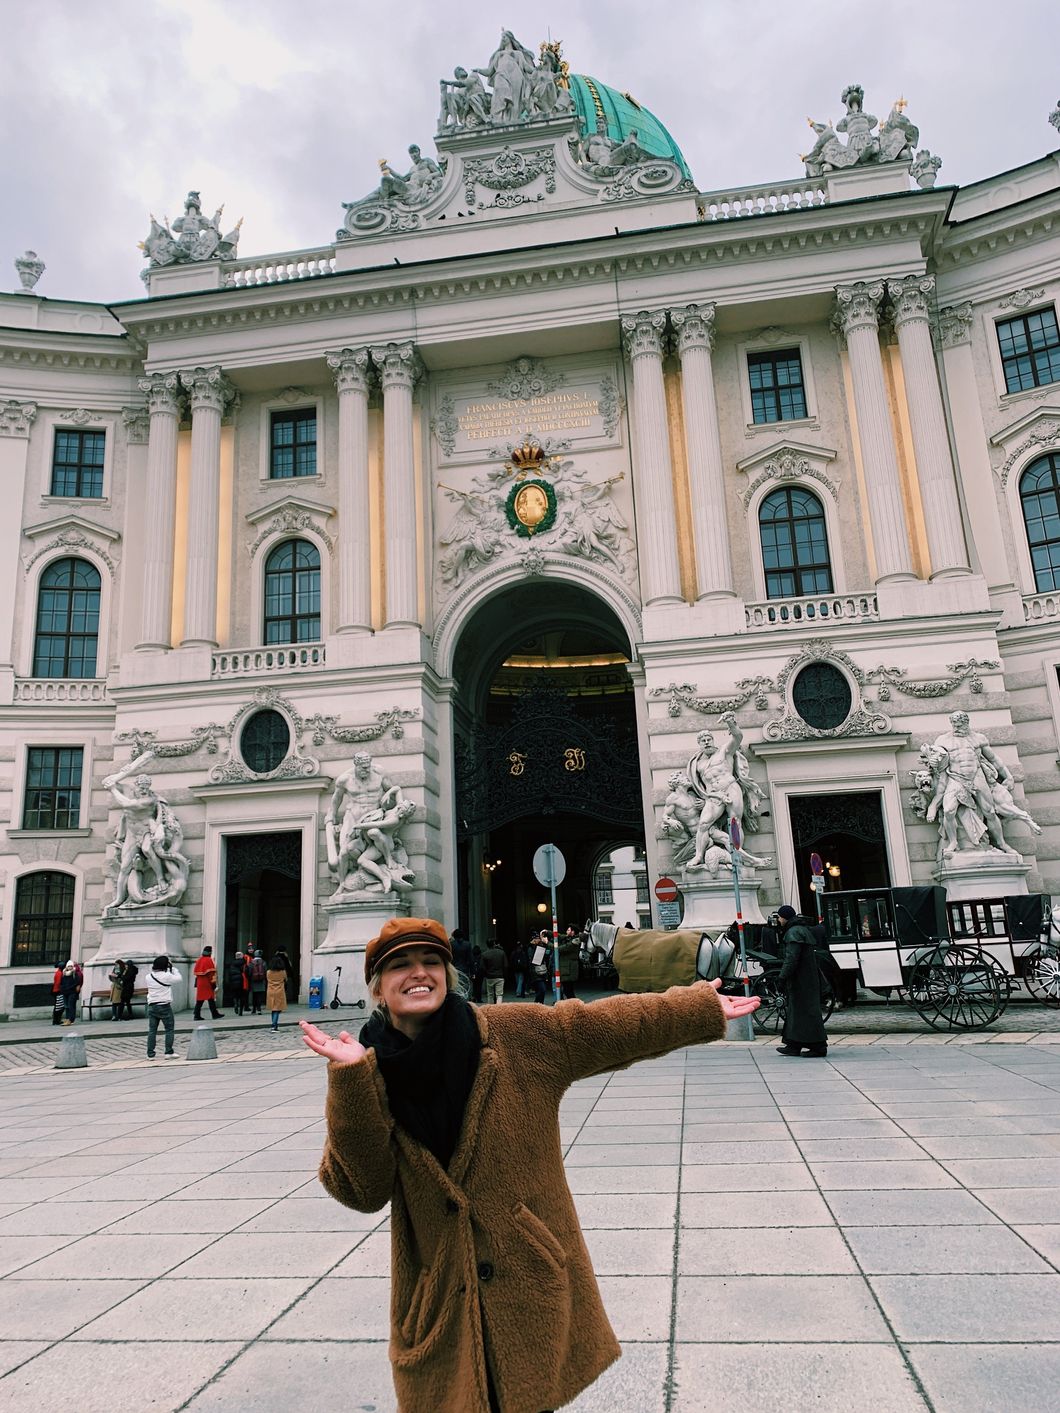 Europe, travel, winter, Vienna, Austria, pose, girl, architecture, city, smile